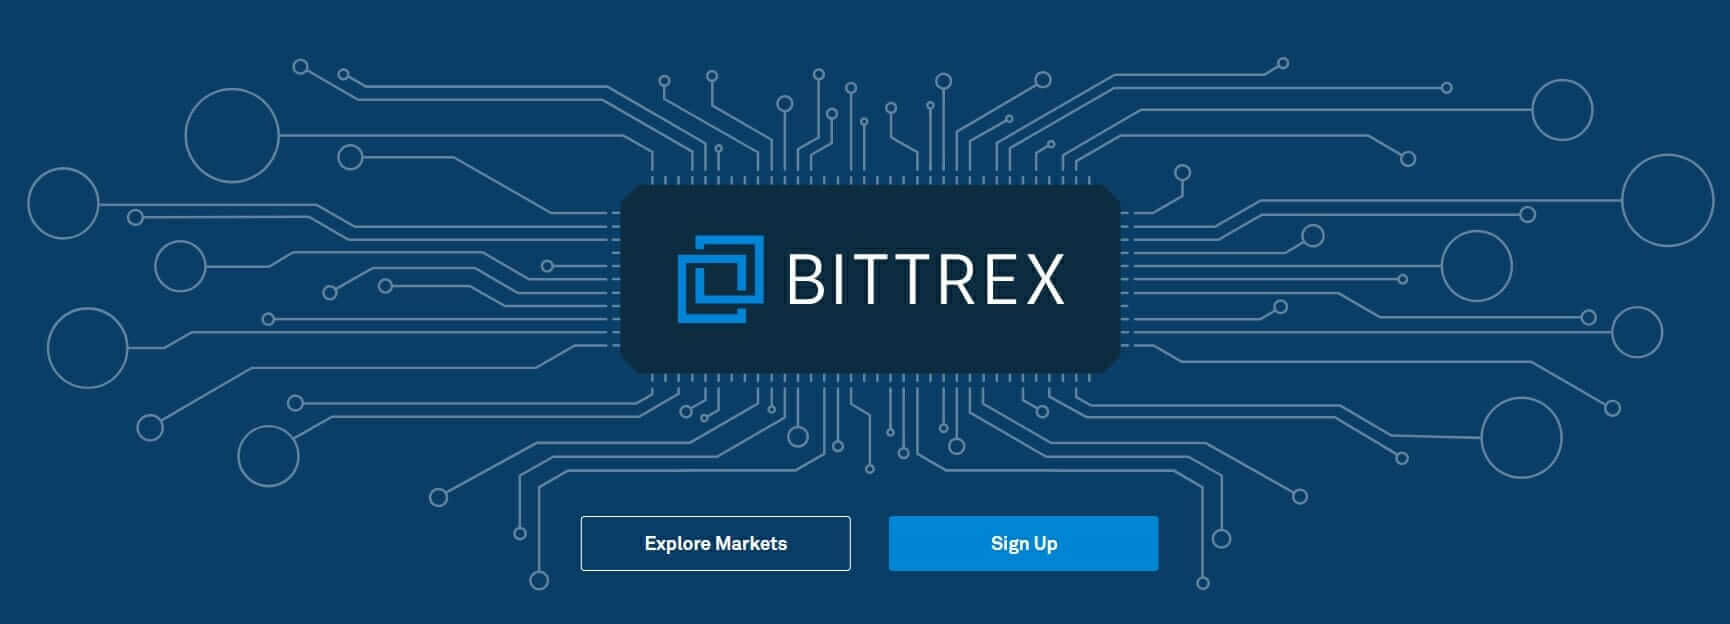 Bittrex trading platform